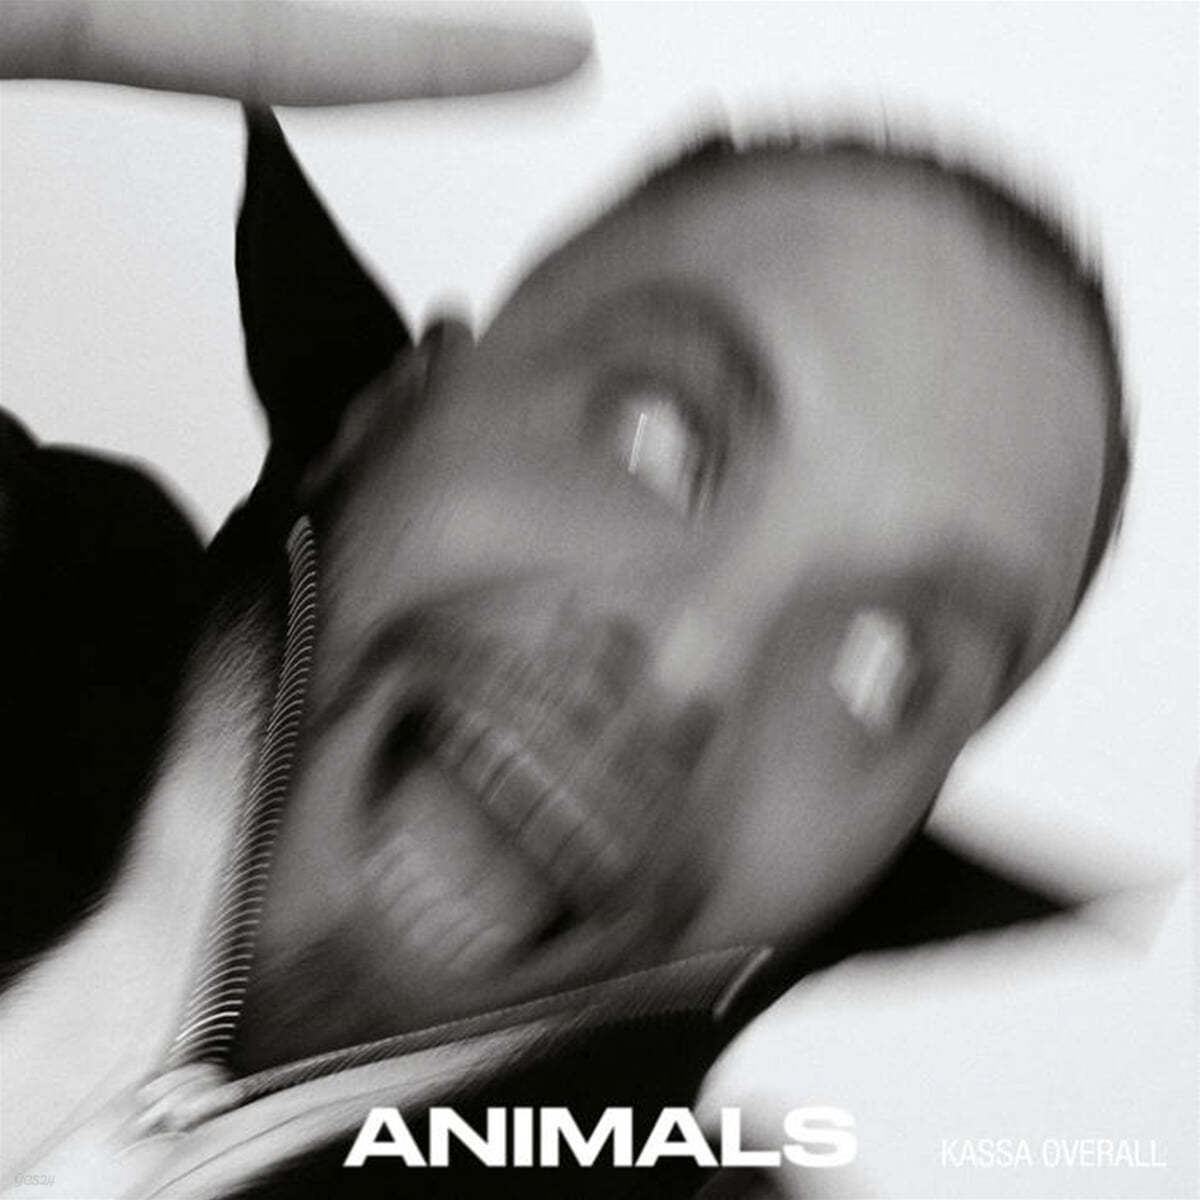 Kassa Overall (카사 오버올) - ANIMALS [투명 컬러 LP] 